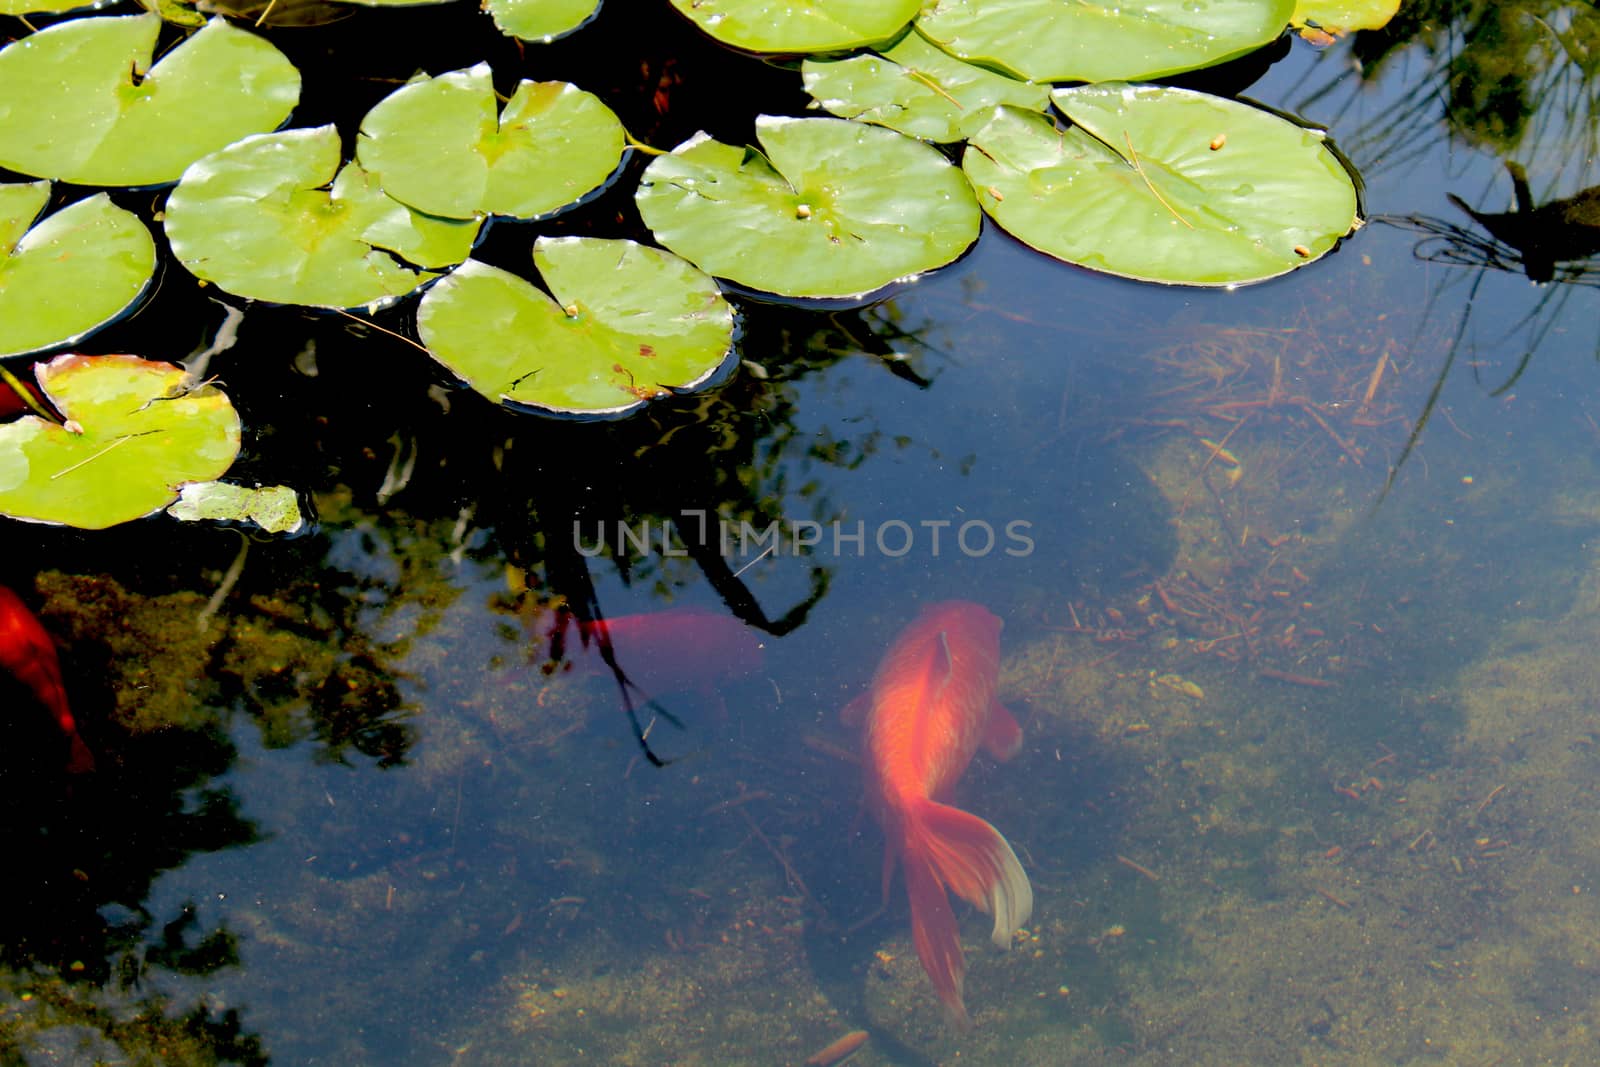 Goldfish Koi swim among green flat Lilly Pads in an ornamental garden pond.